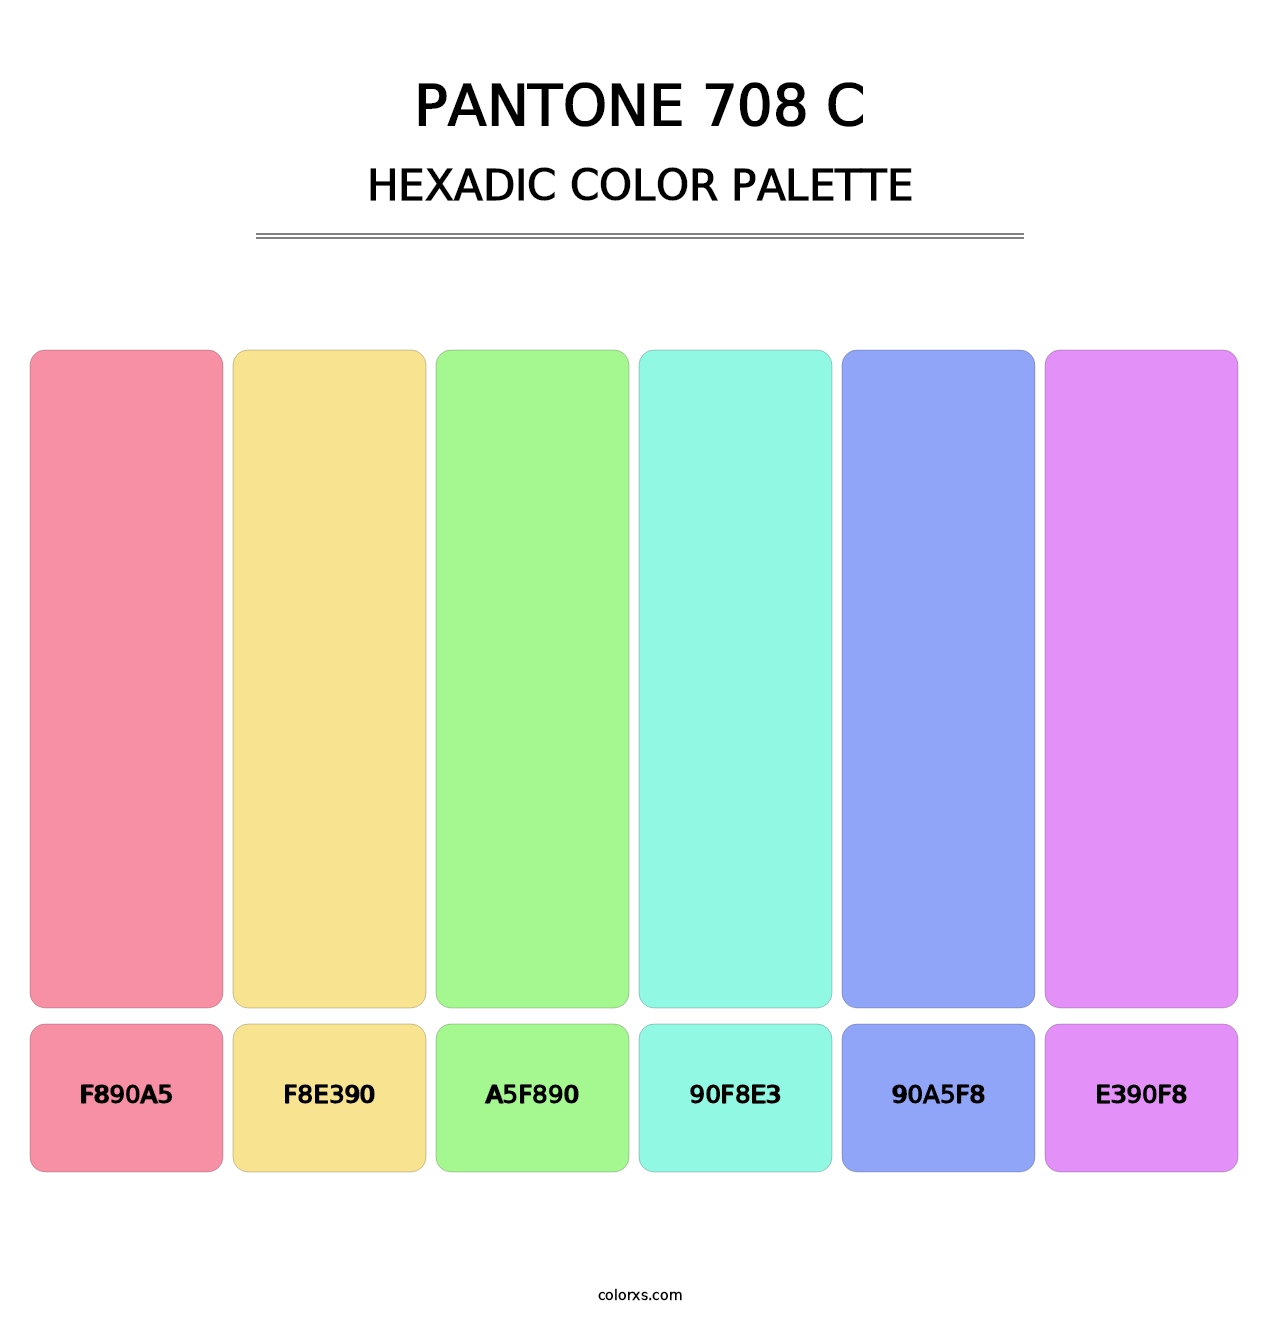 PANTONE 708 C - Hexadic Color Palette